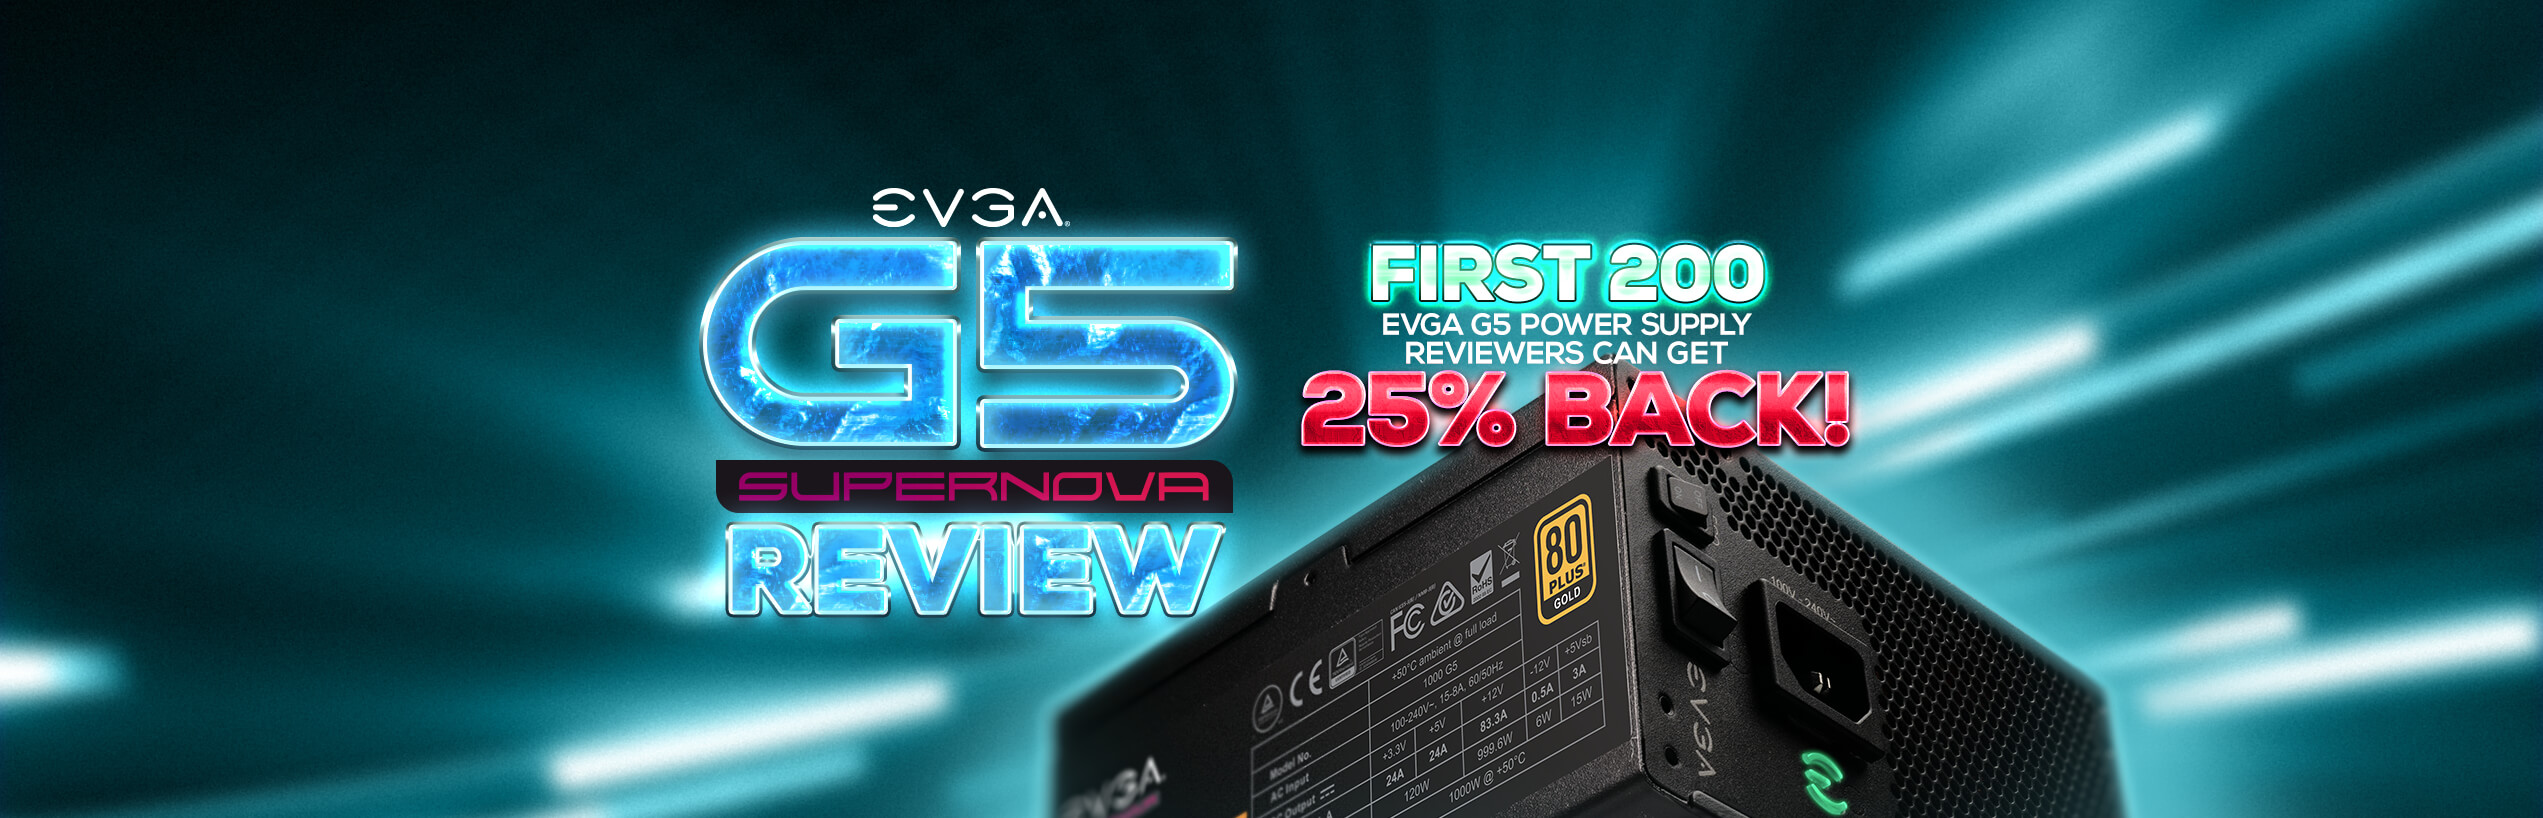 EVGA G5 PSU Review Promotion